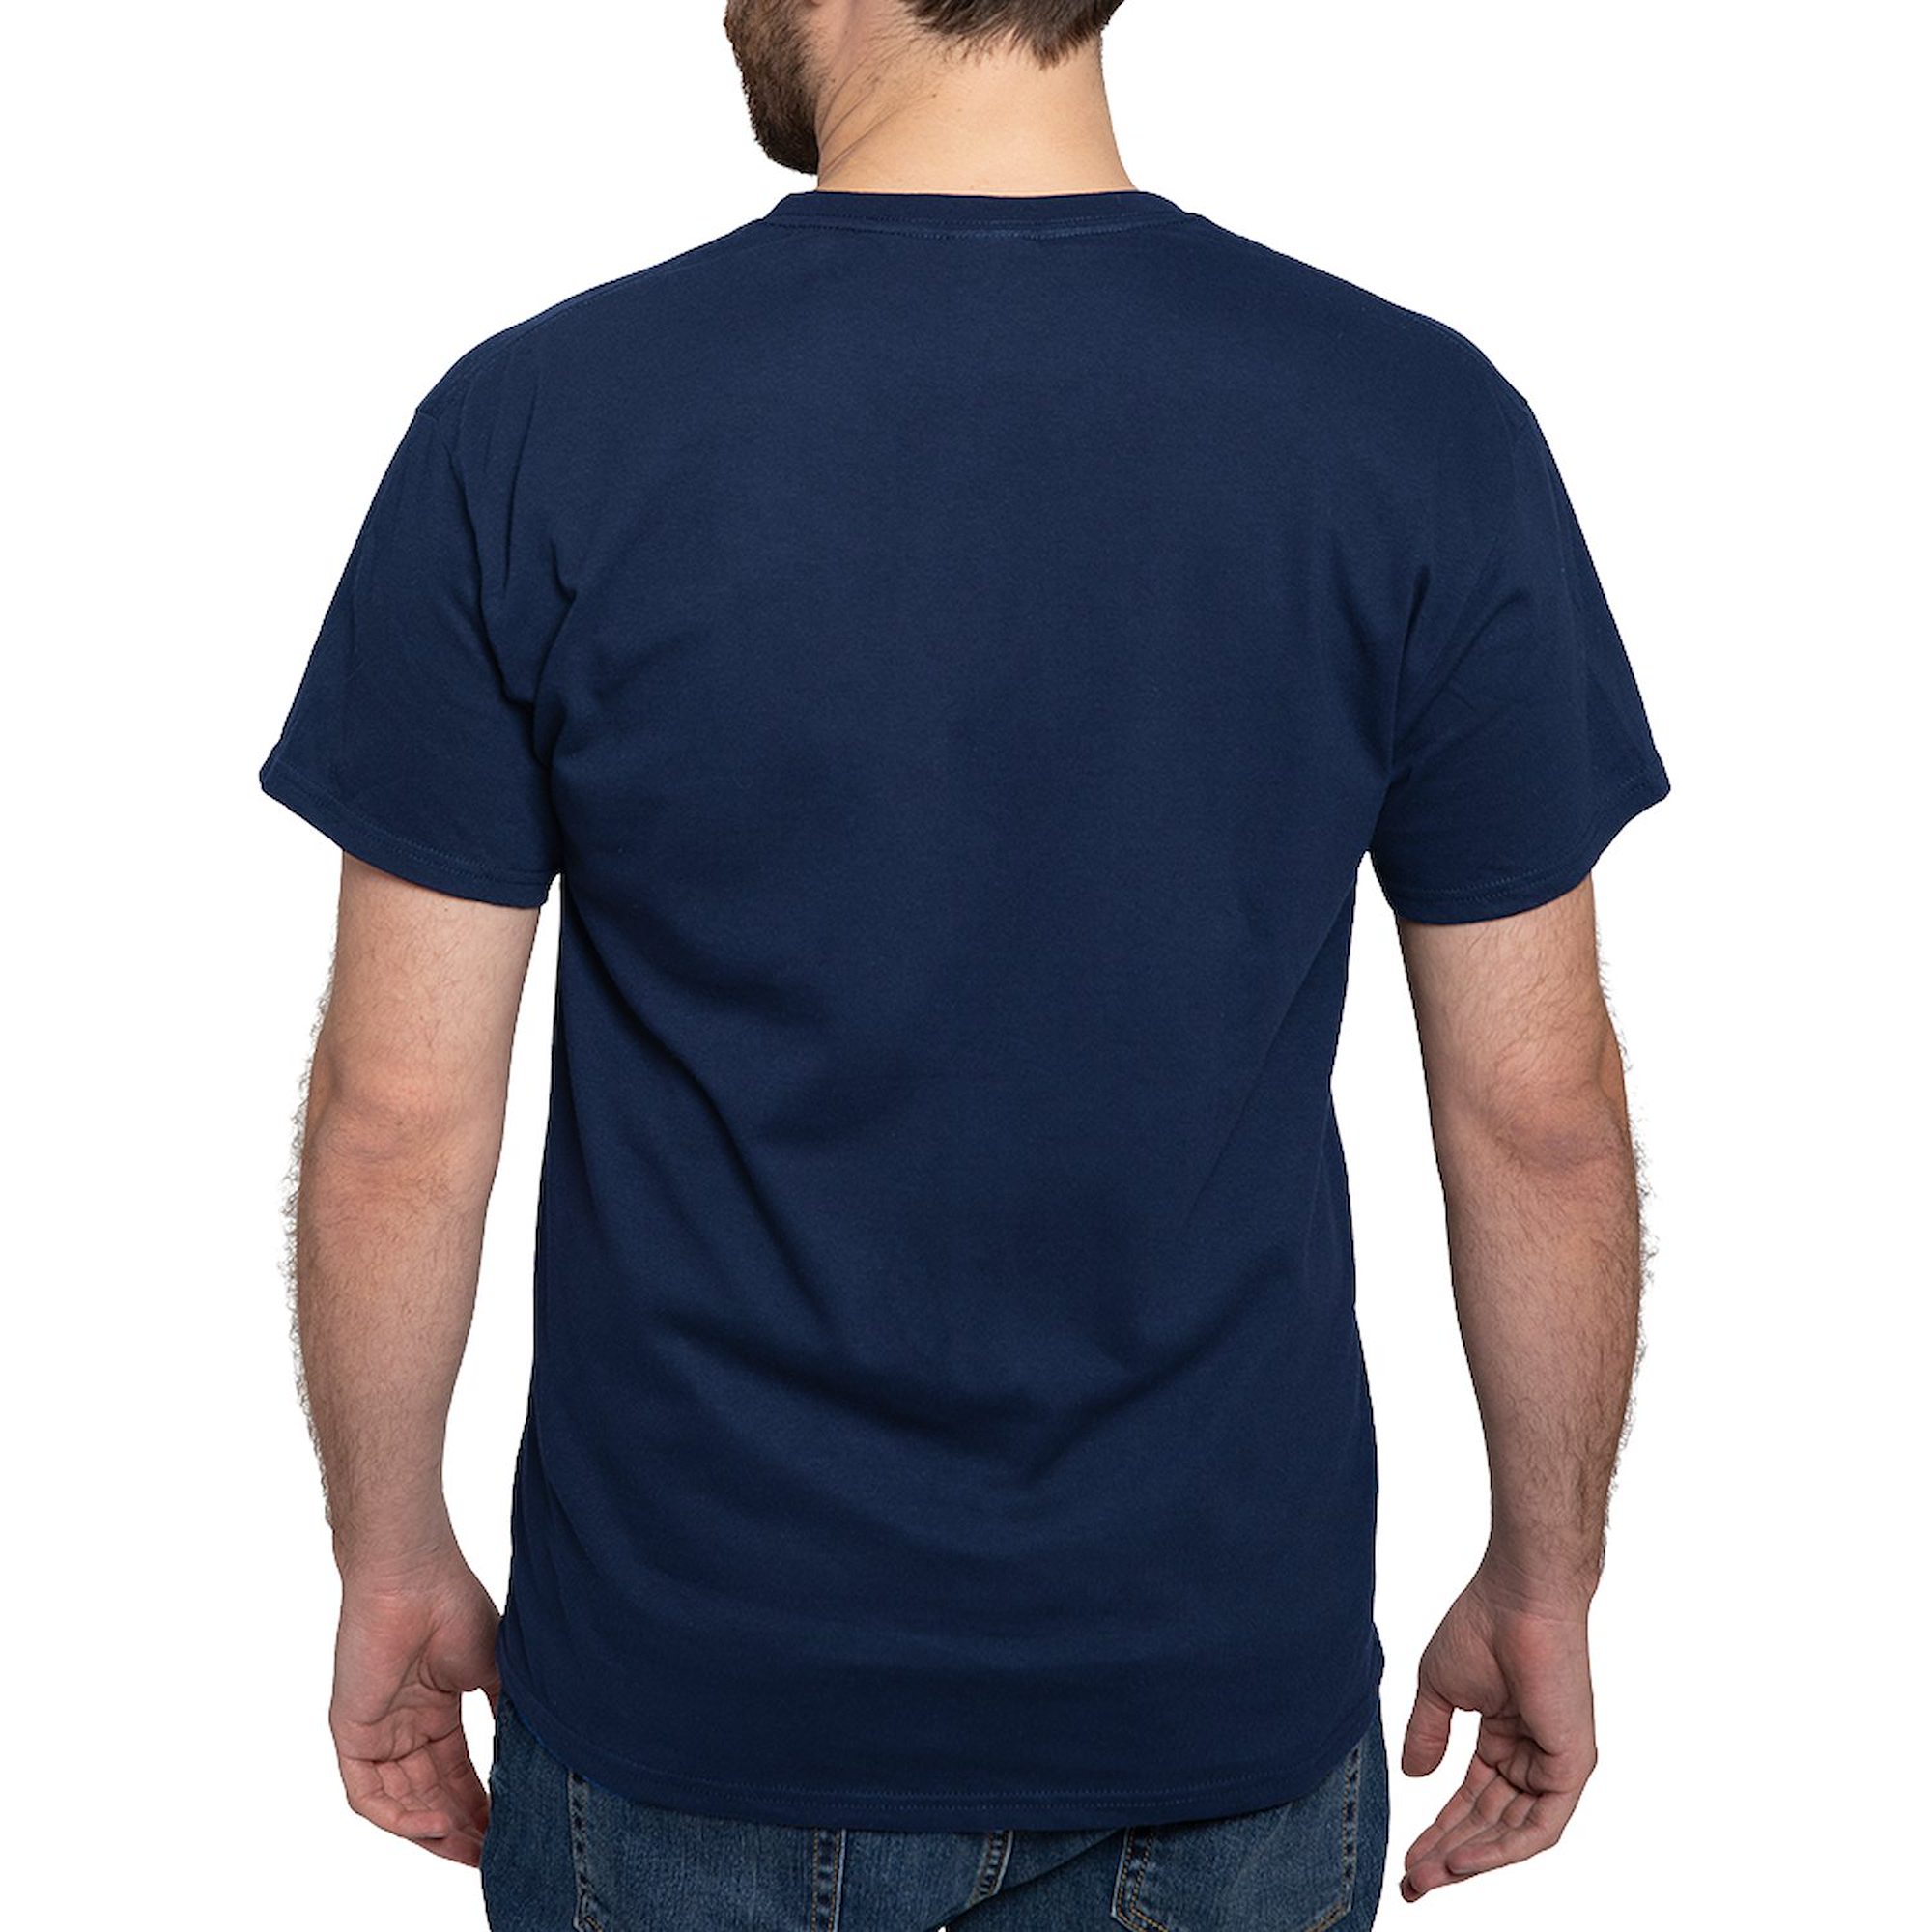 CafePress - Cinco De Mayo Funny Tshirts Gifts Shirts T Shirt - 100% Cotton T-Shirt - image 2 of 4